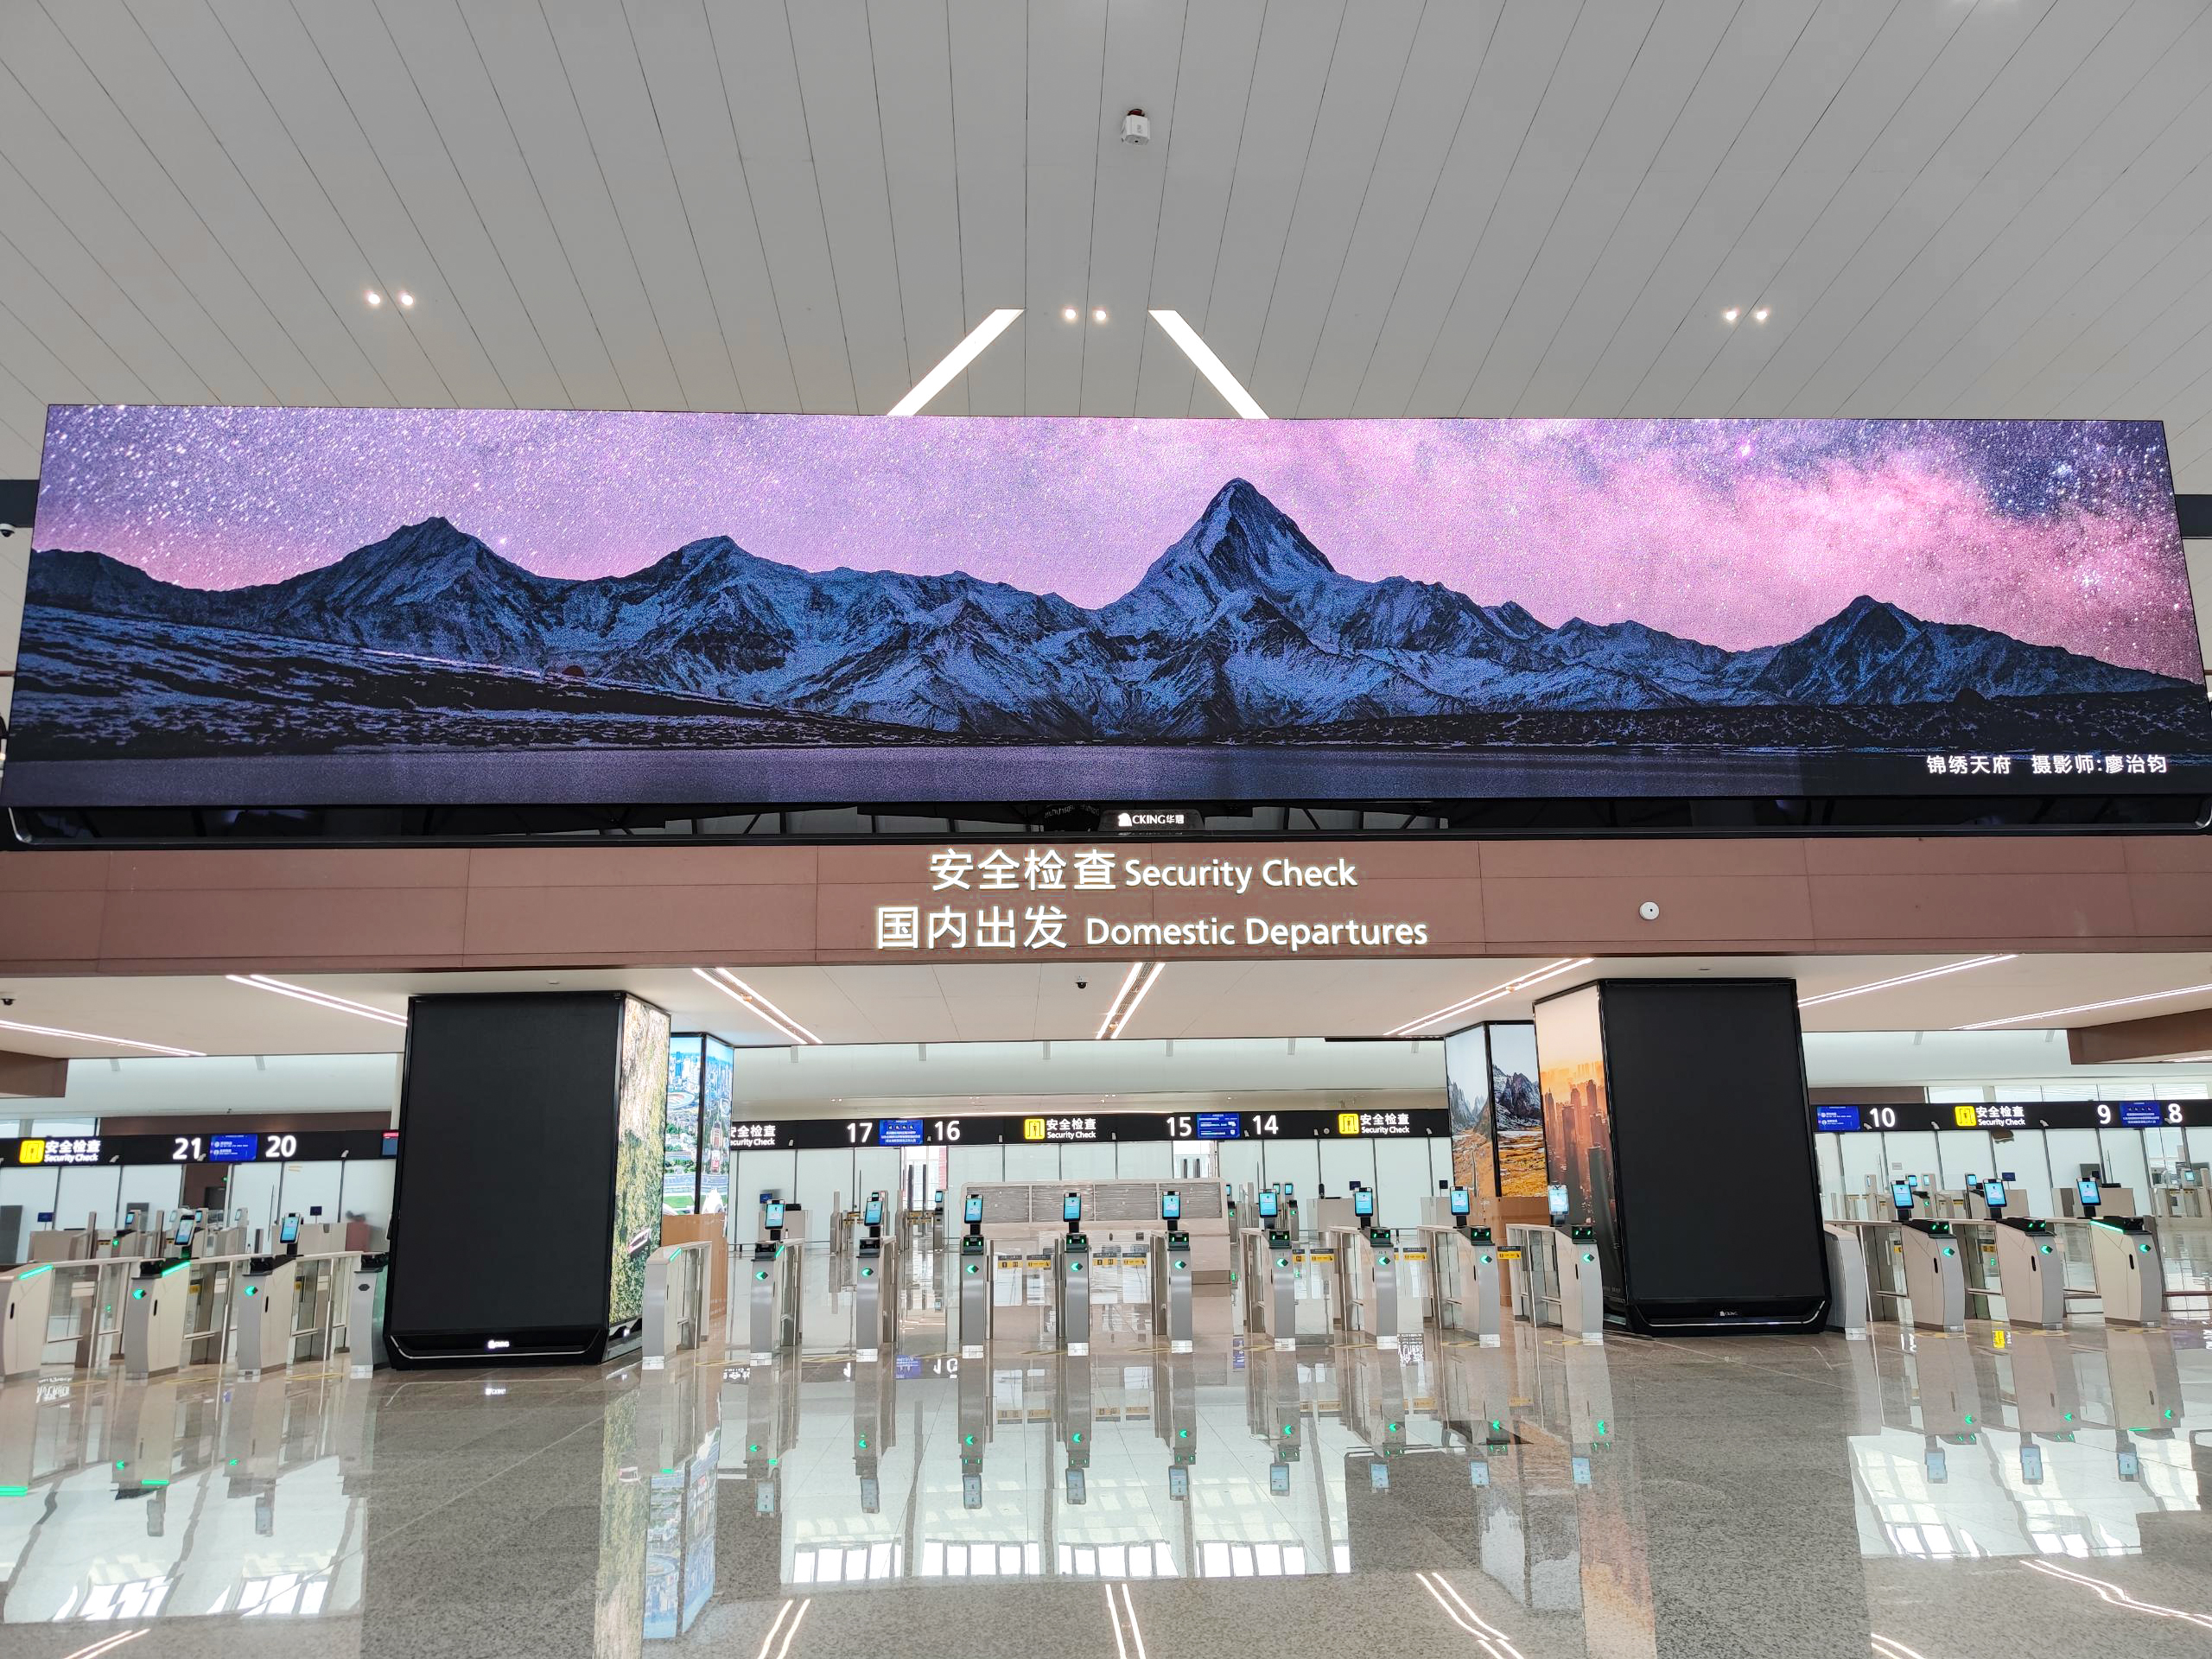 INFiLED LED Display light up at the Chengdu Tianfu International Airport